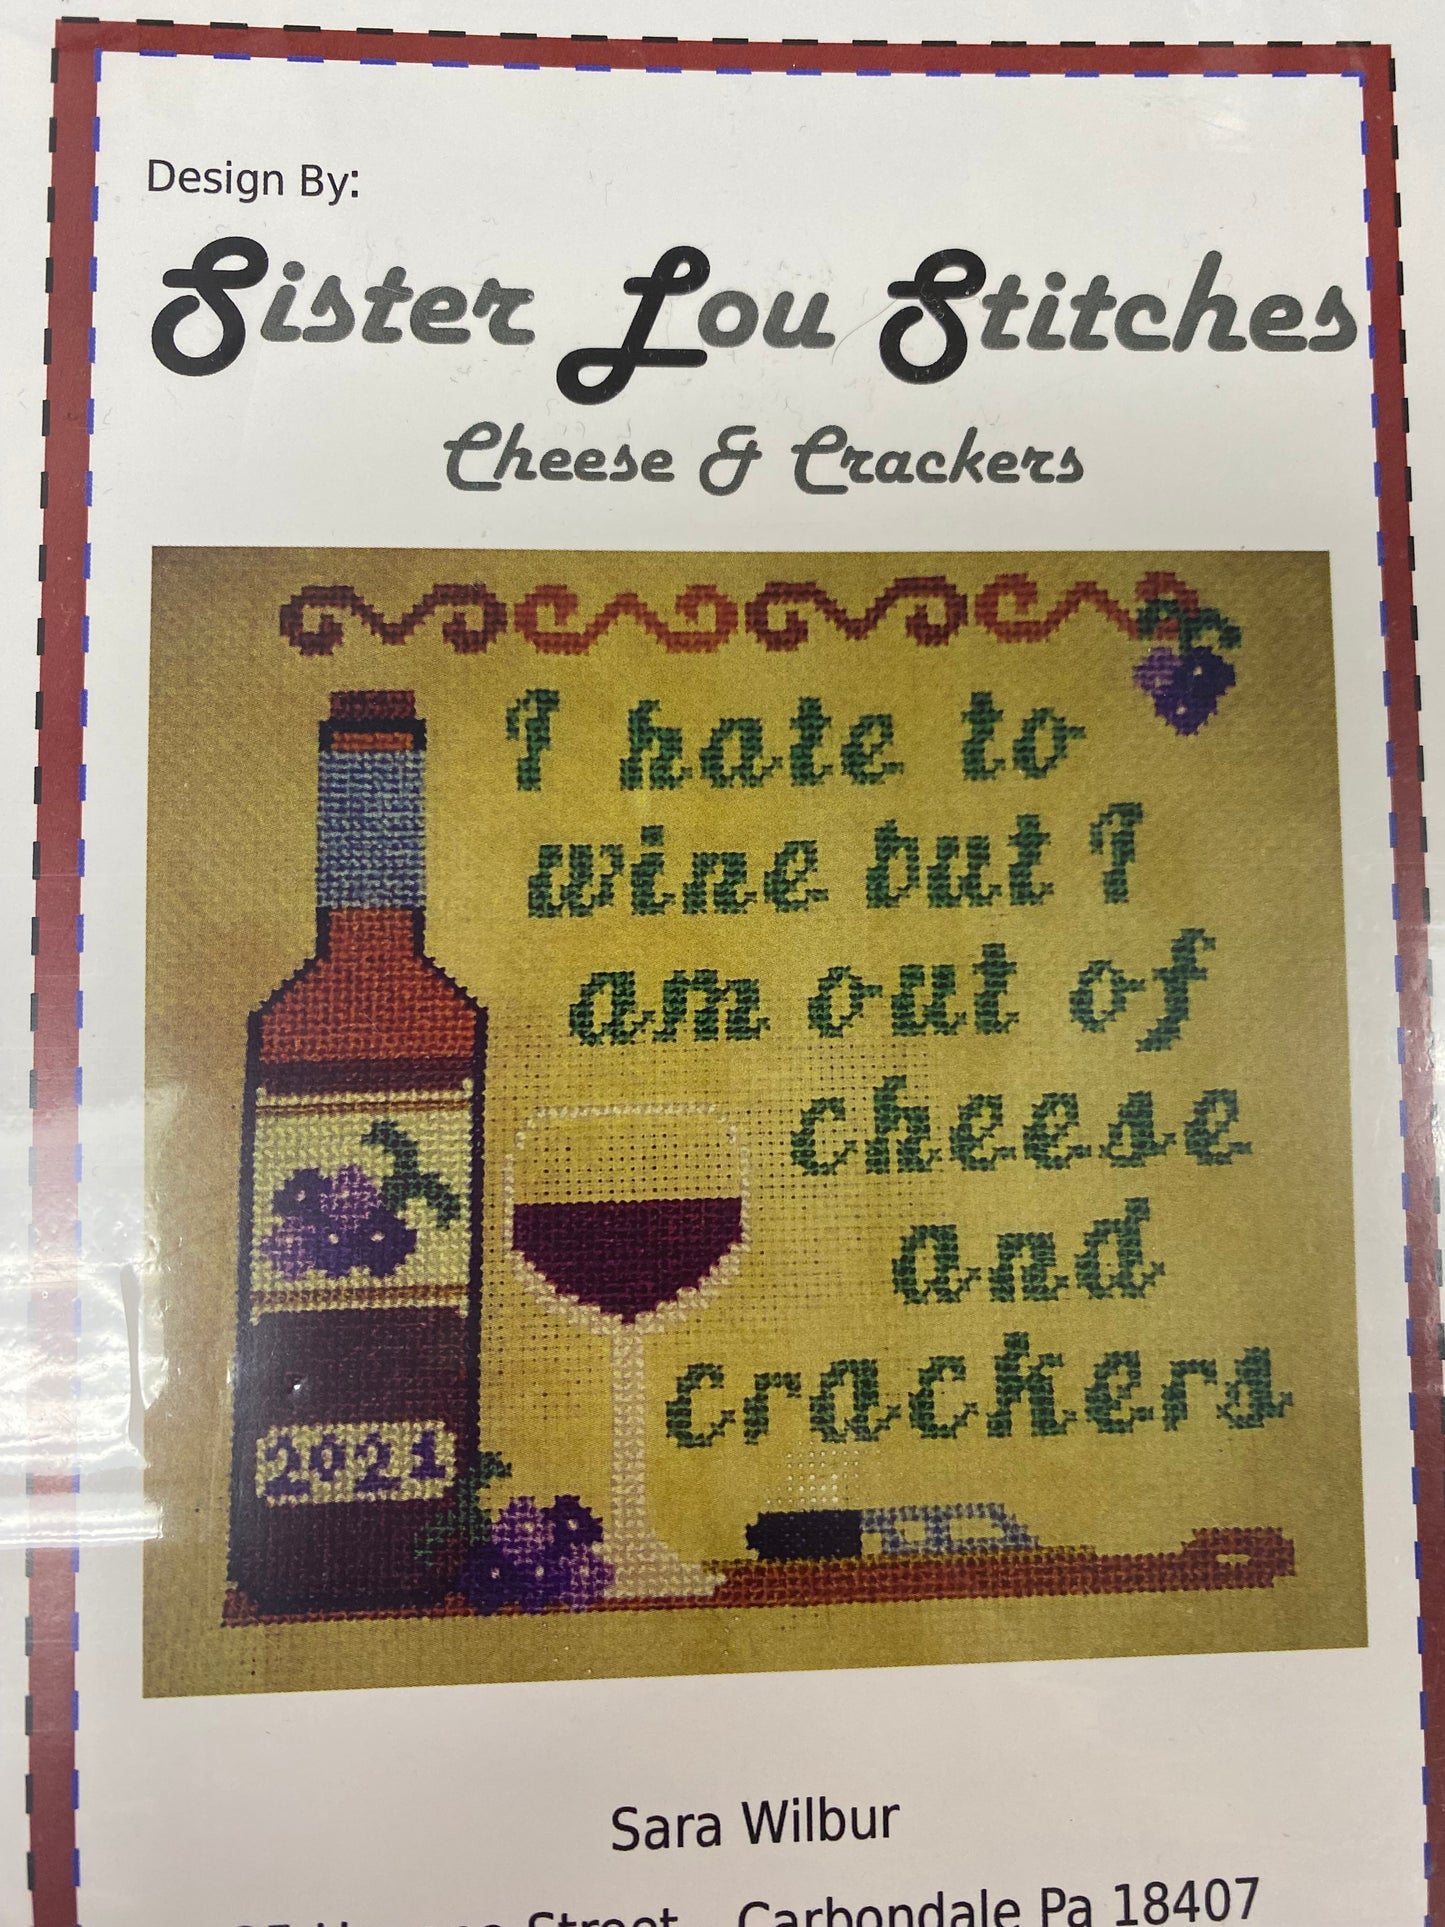 Sister Lou Stitches